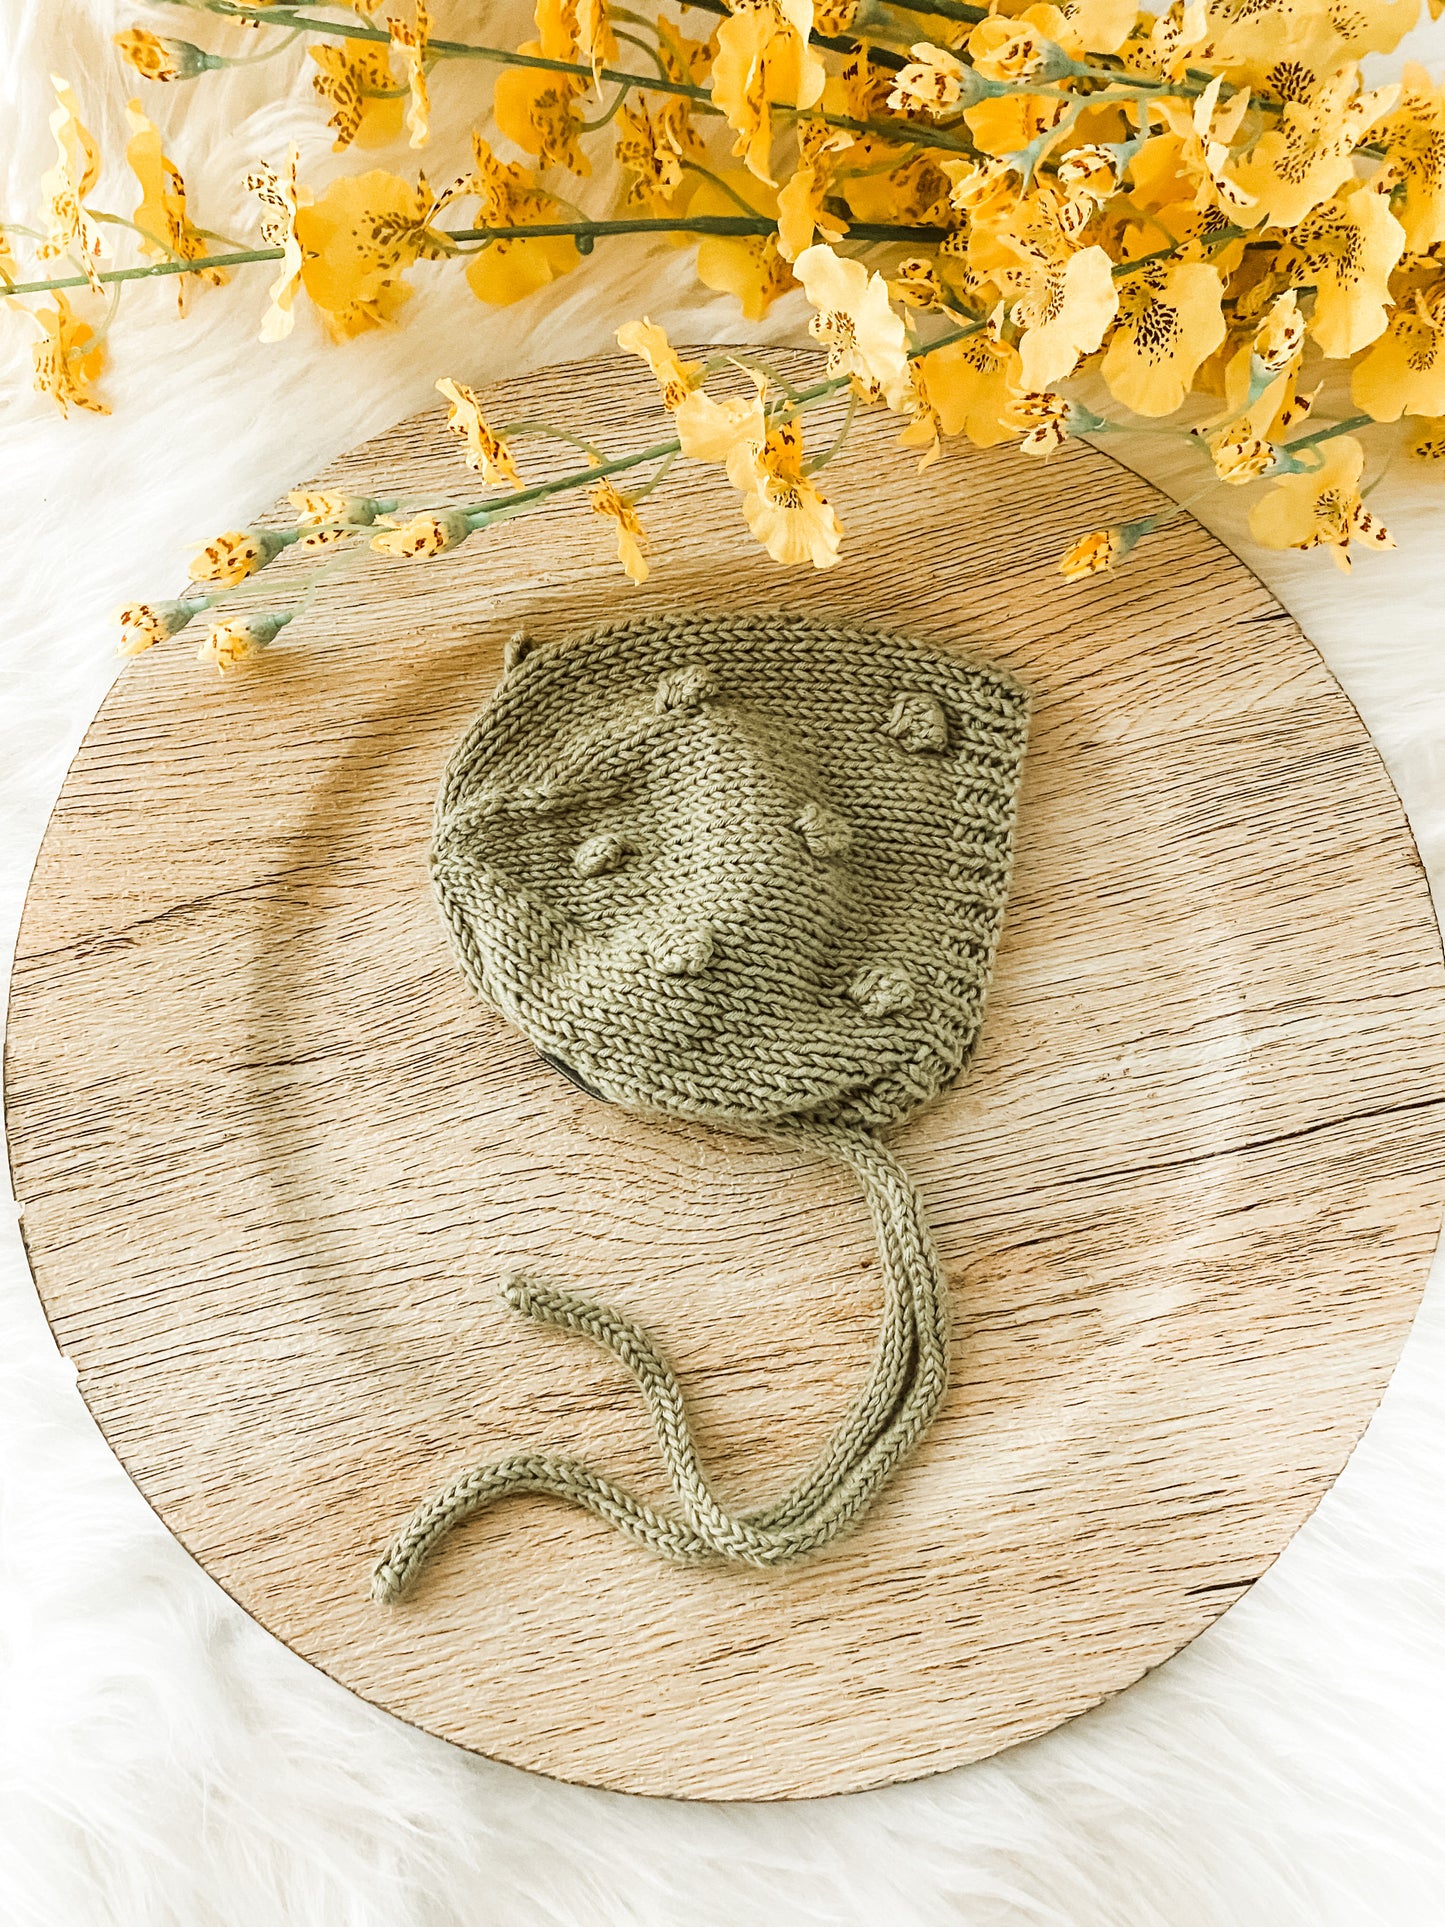 Knitted Baby Bonnet, Unisex Bobble Baby Hat in Sage Green, Newborn Photo Prop